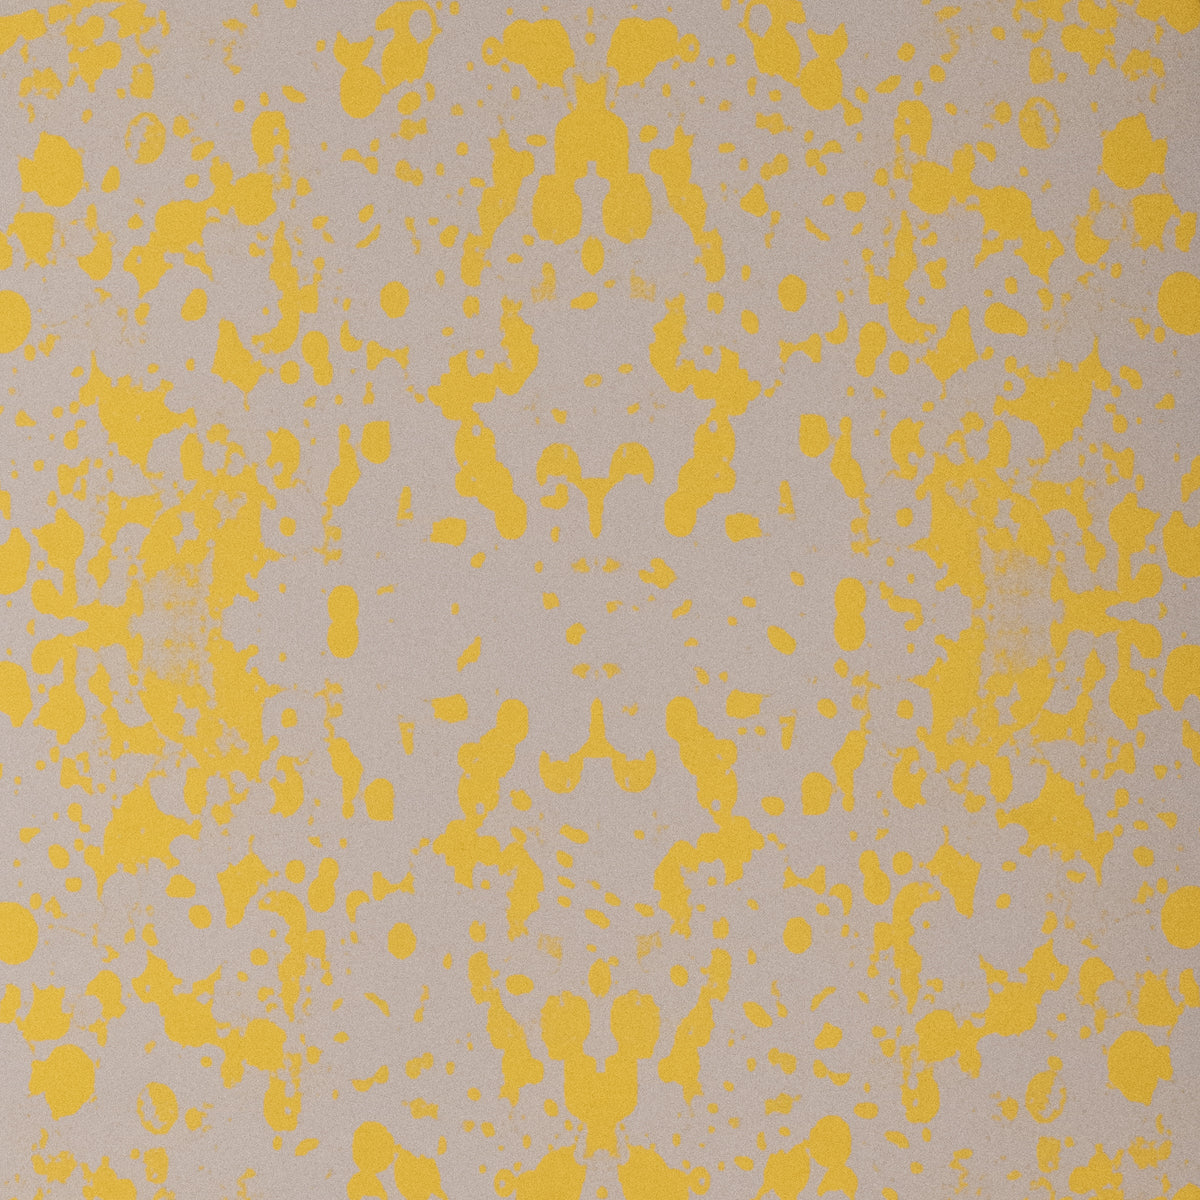 Laz Studio house Spots Wallpaper (Blossom)